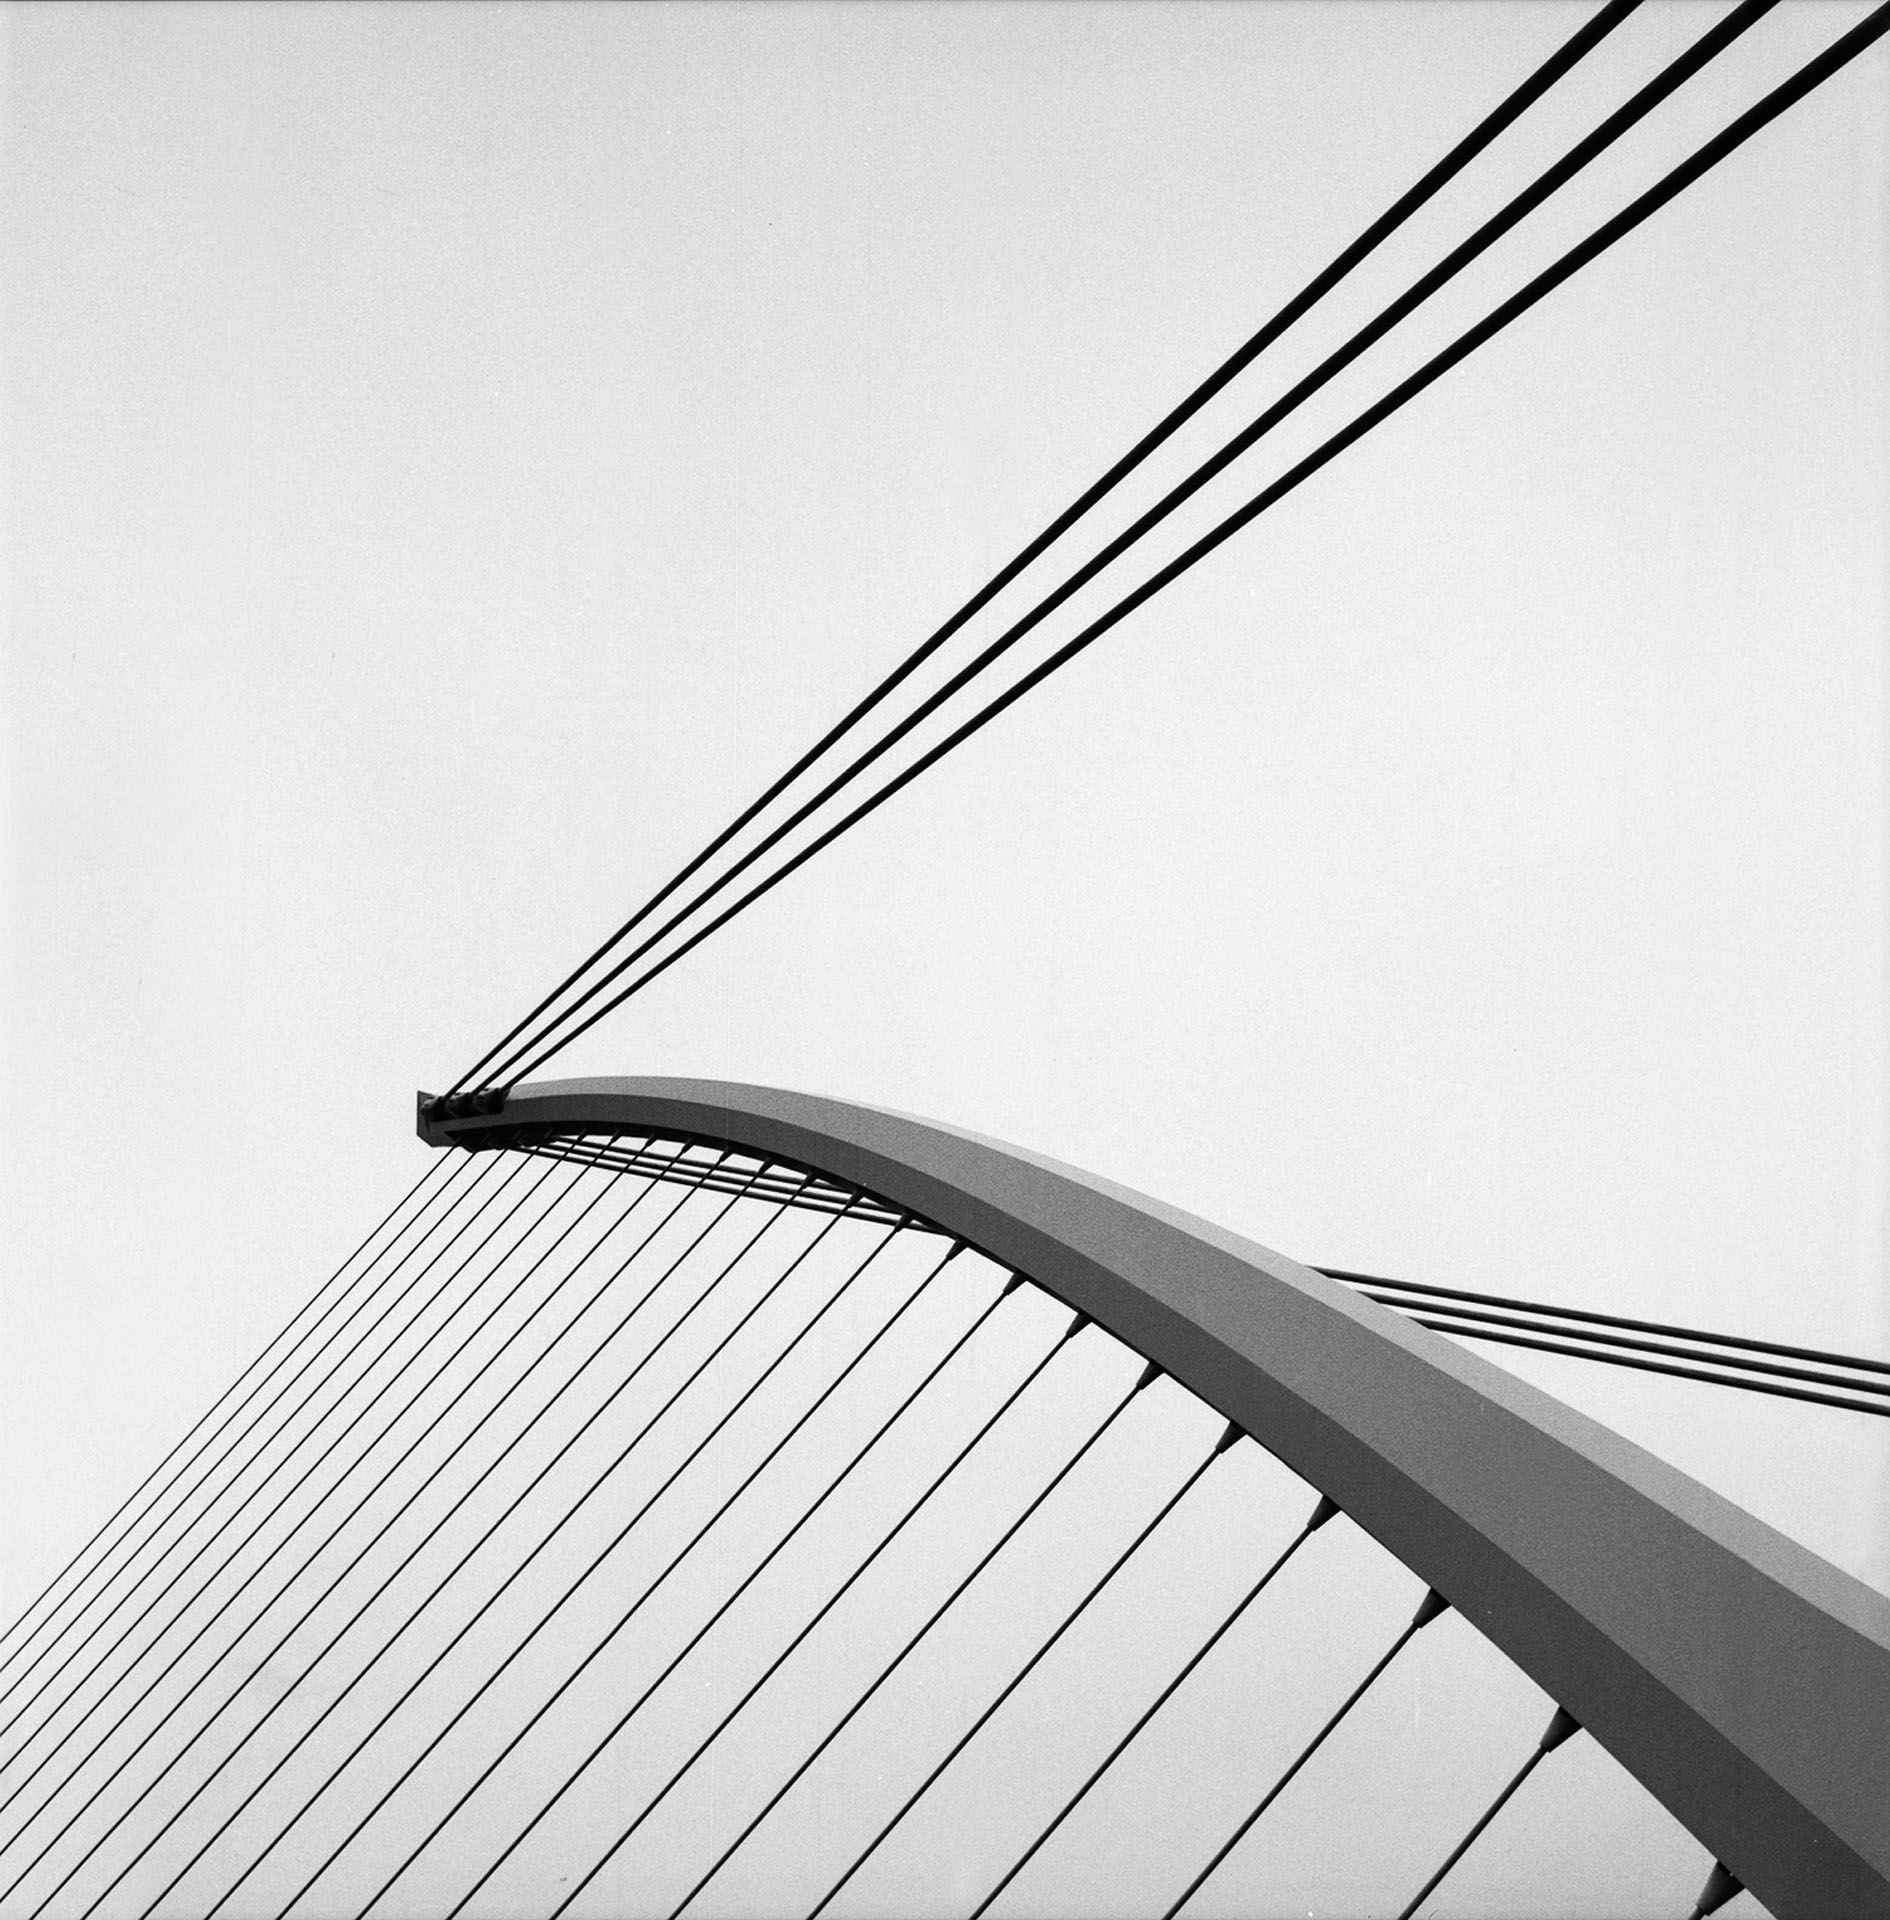 Samuel Beckett's Bridge, Dublin by David Hatters